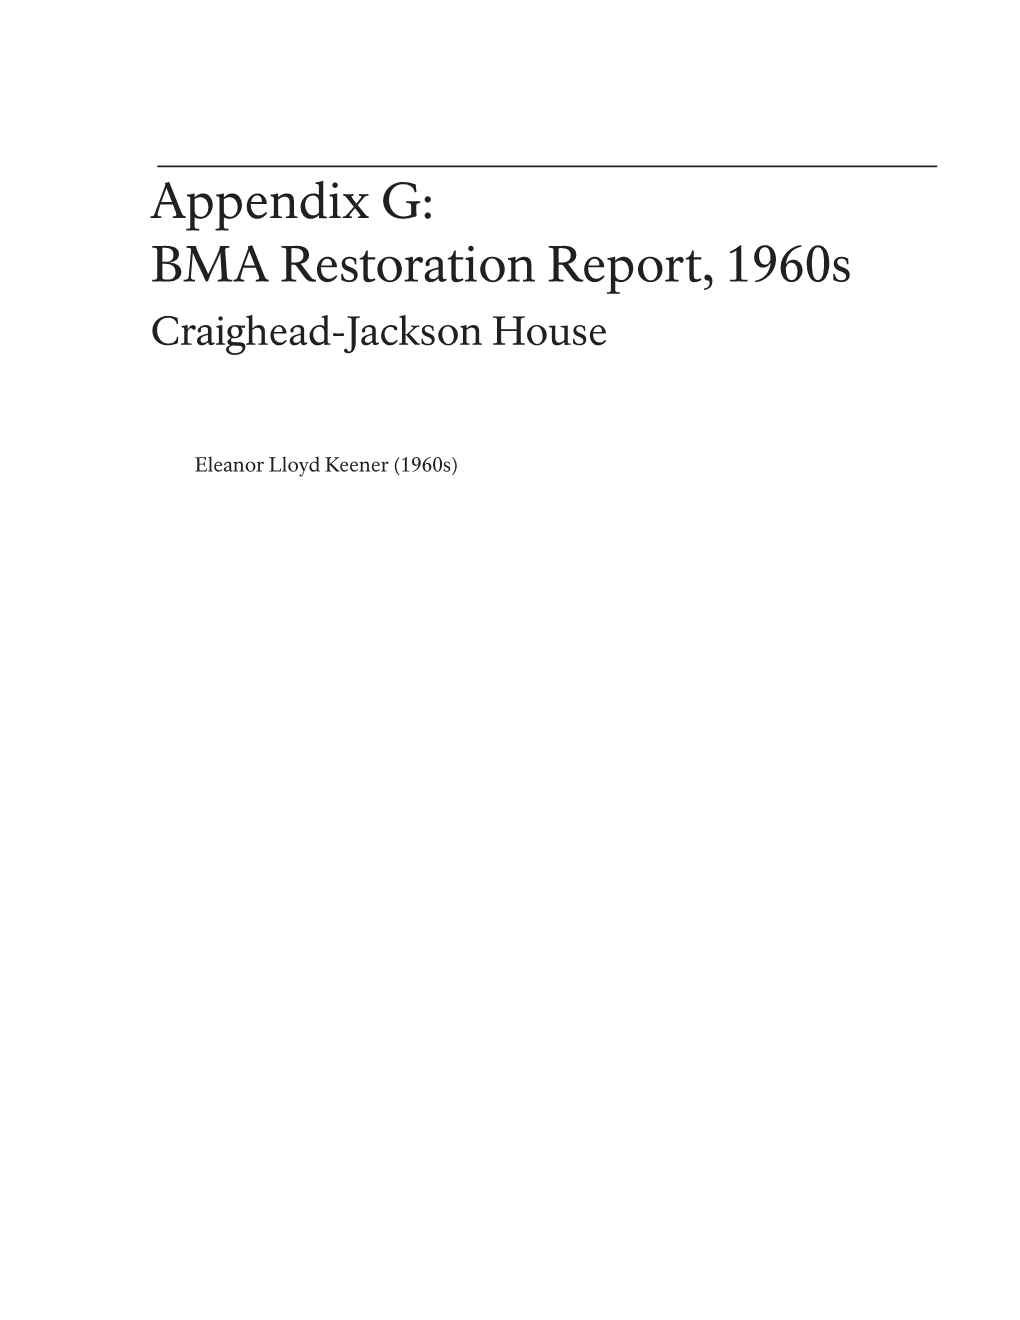 Appendix G: BMA Restoration Report, 1960S Craighead-Jackson House